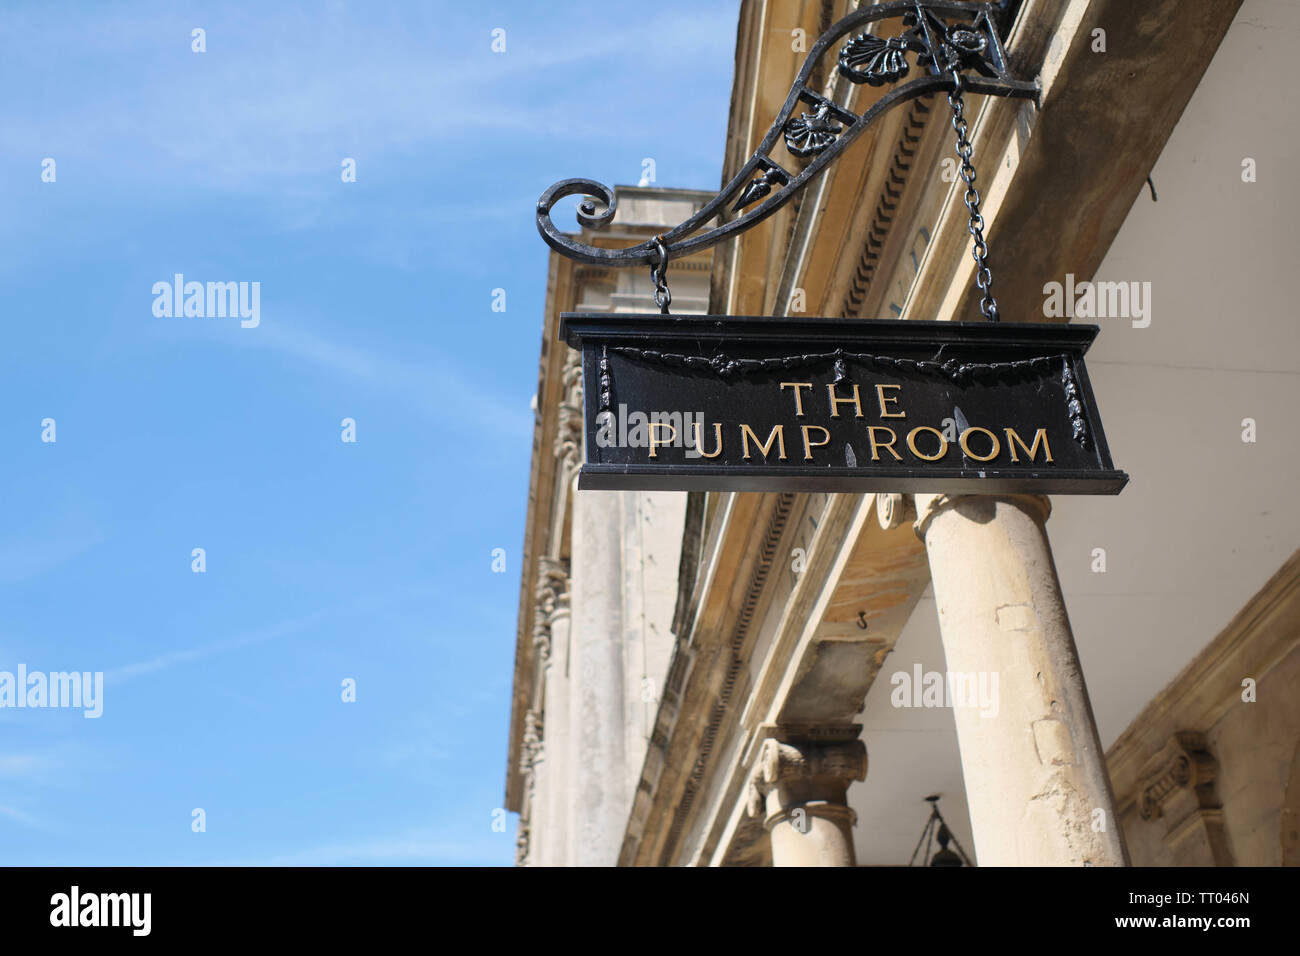 The Pump Room restaurant, Bath England, UK. Stock Photo